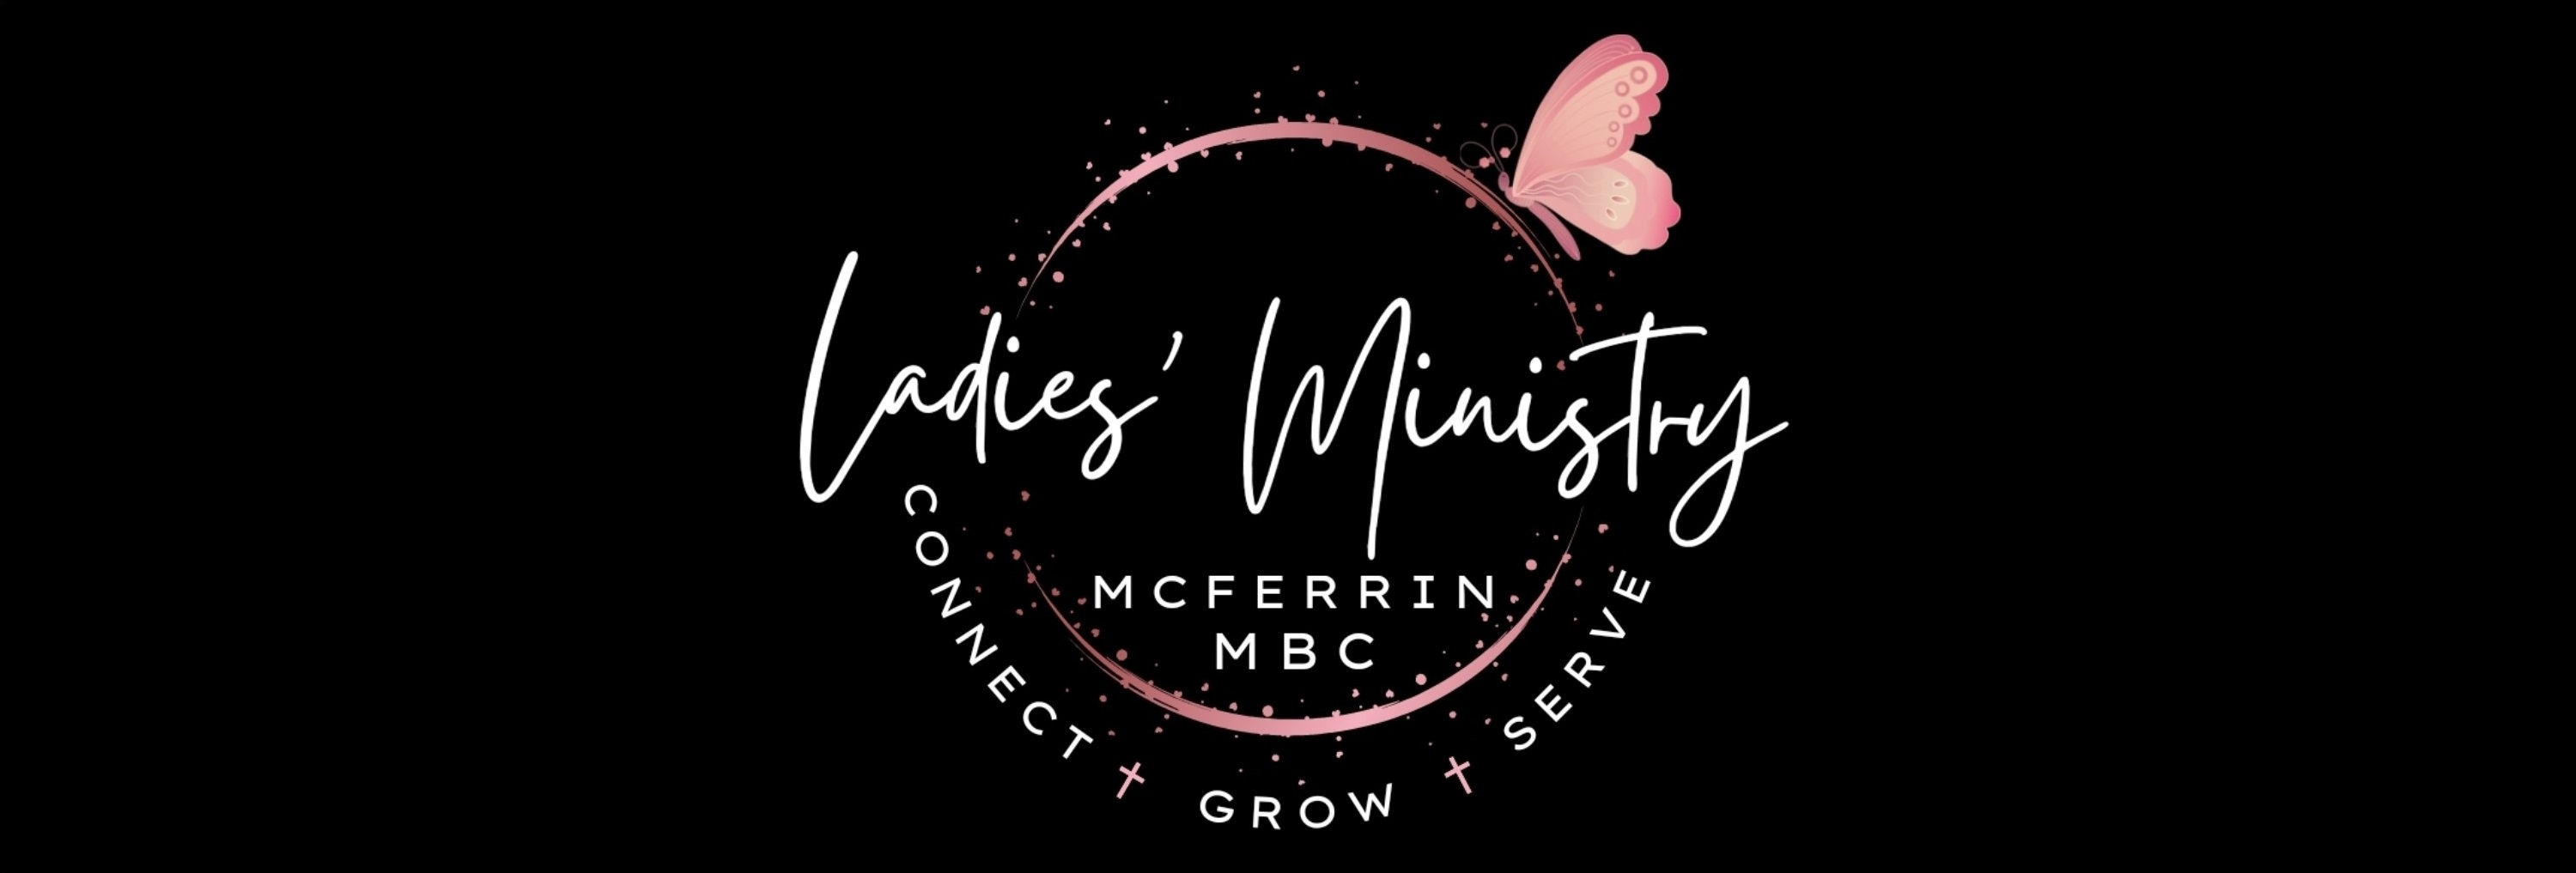 McFerrin Ladies Ministry